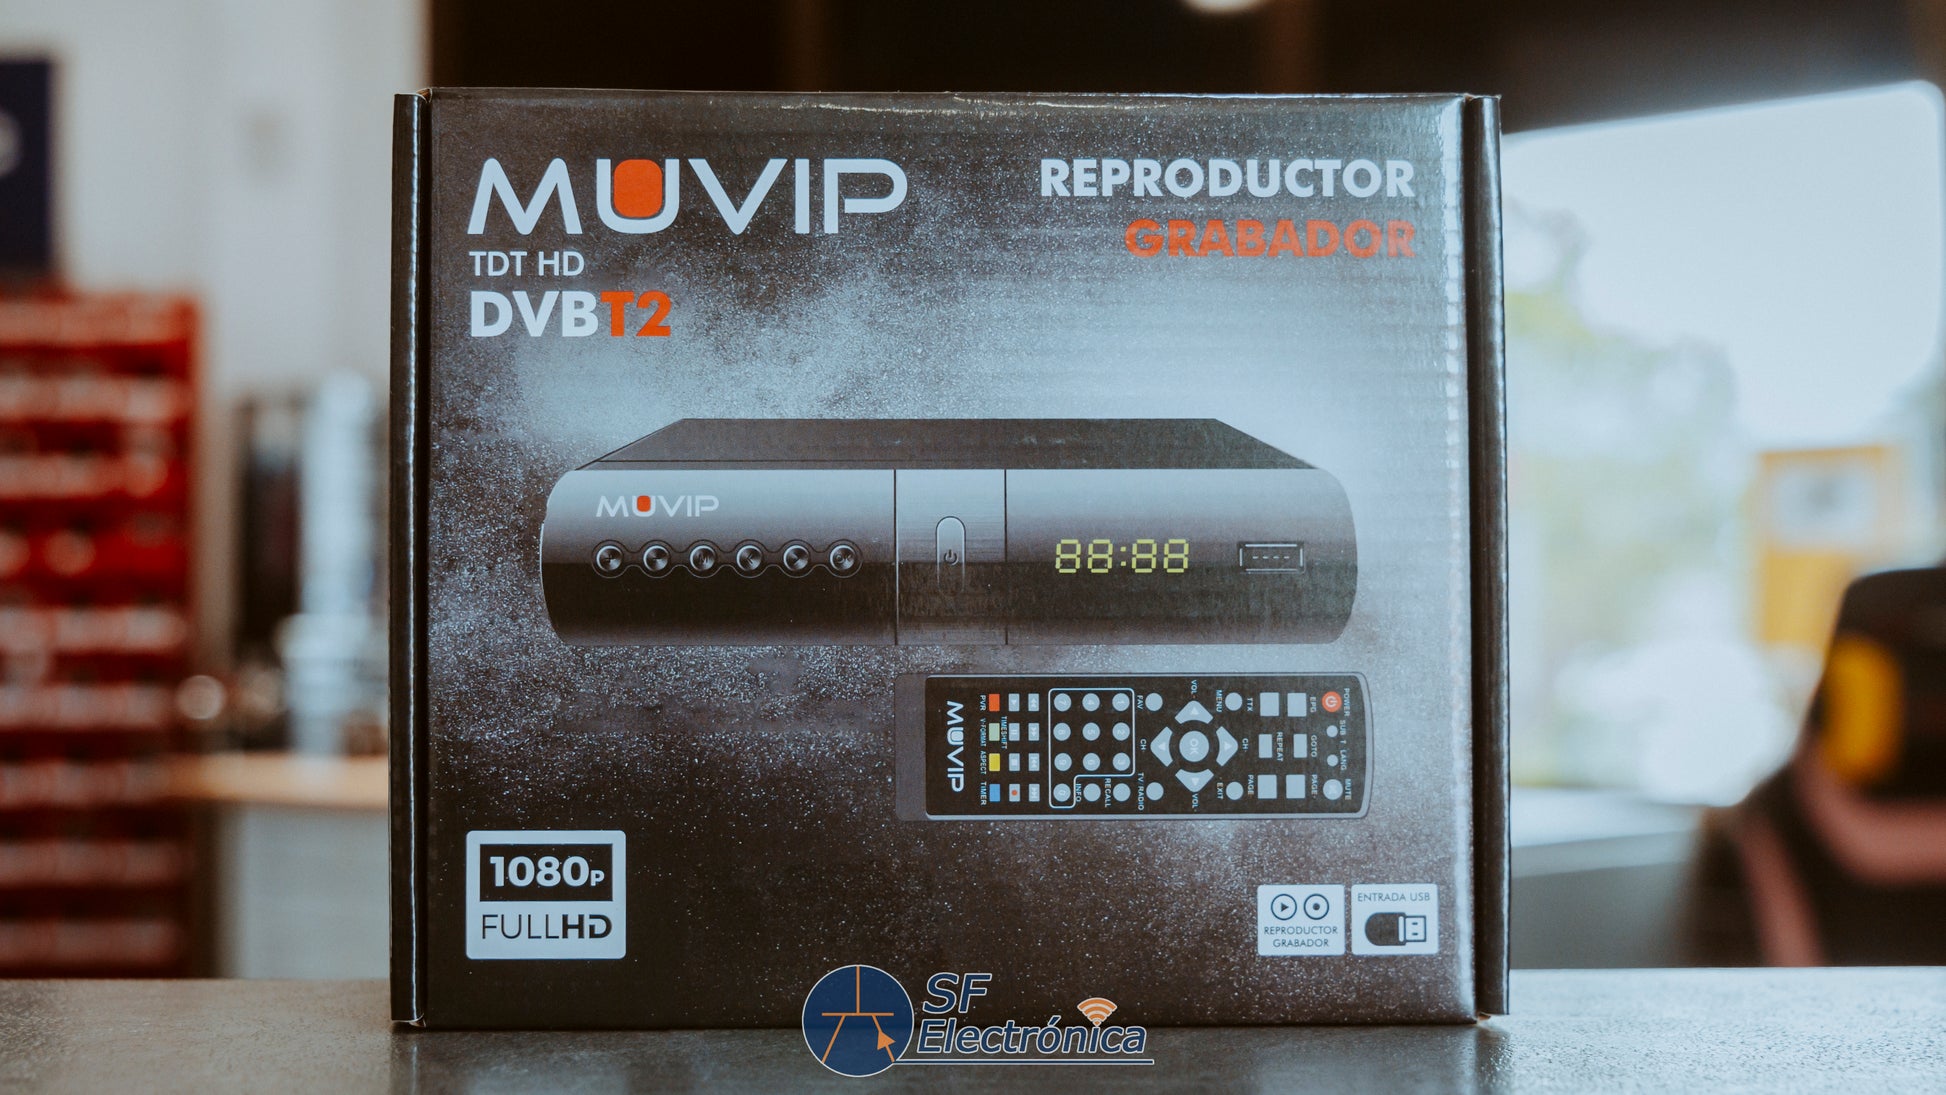 TDT HD REPRODUCTOR-GRABADOR DVB-T2 MUVIP – sfelectronica